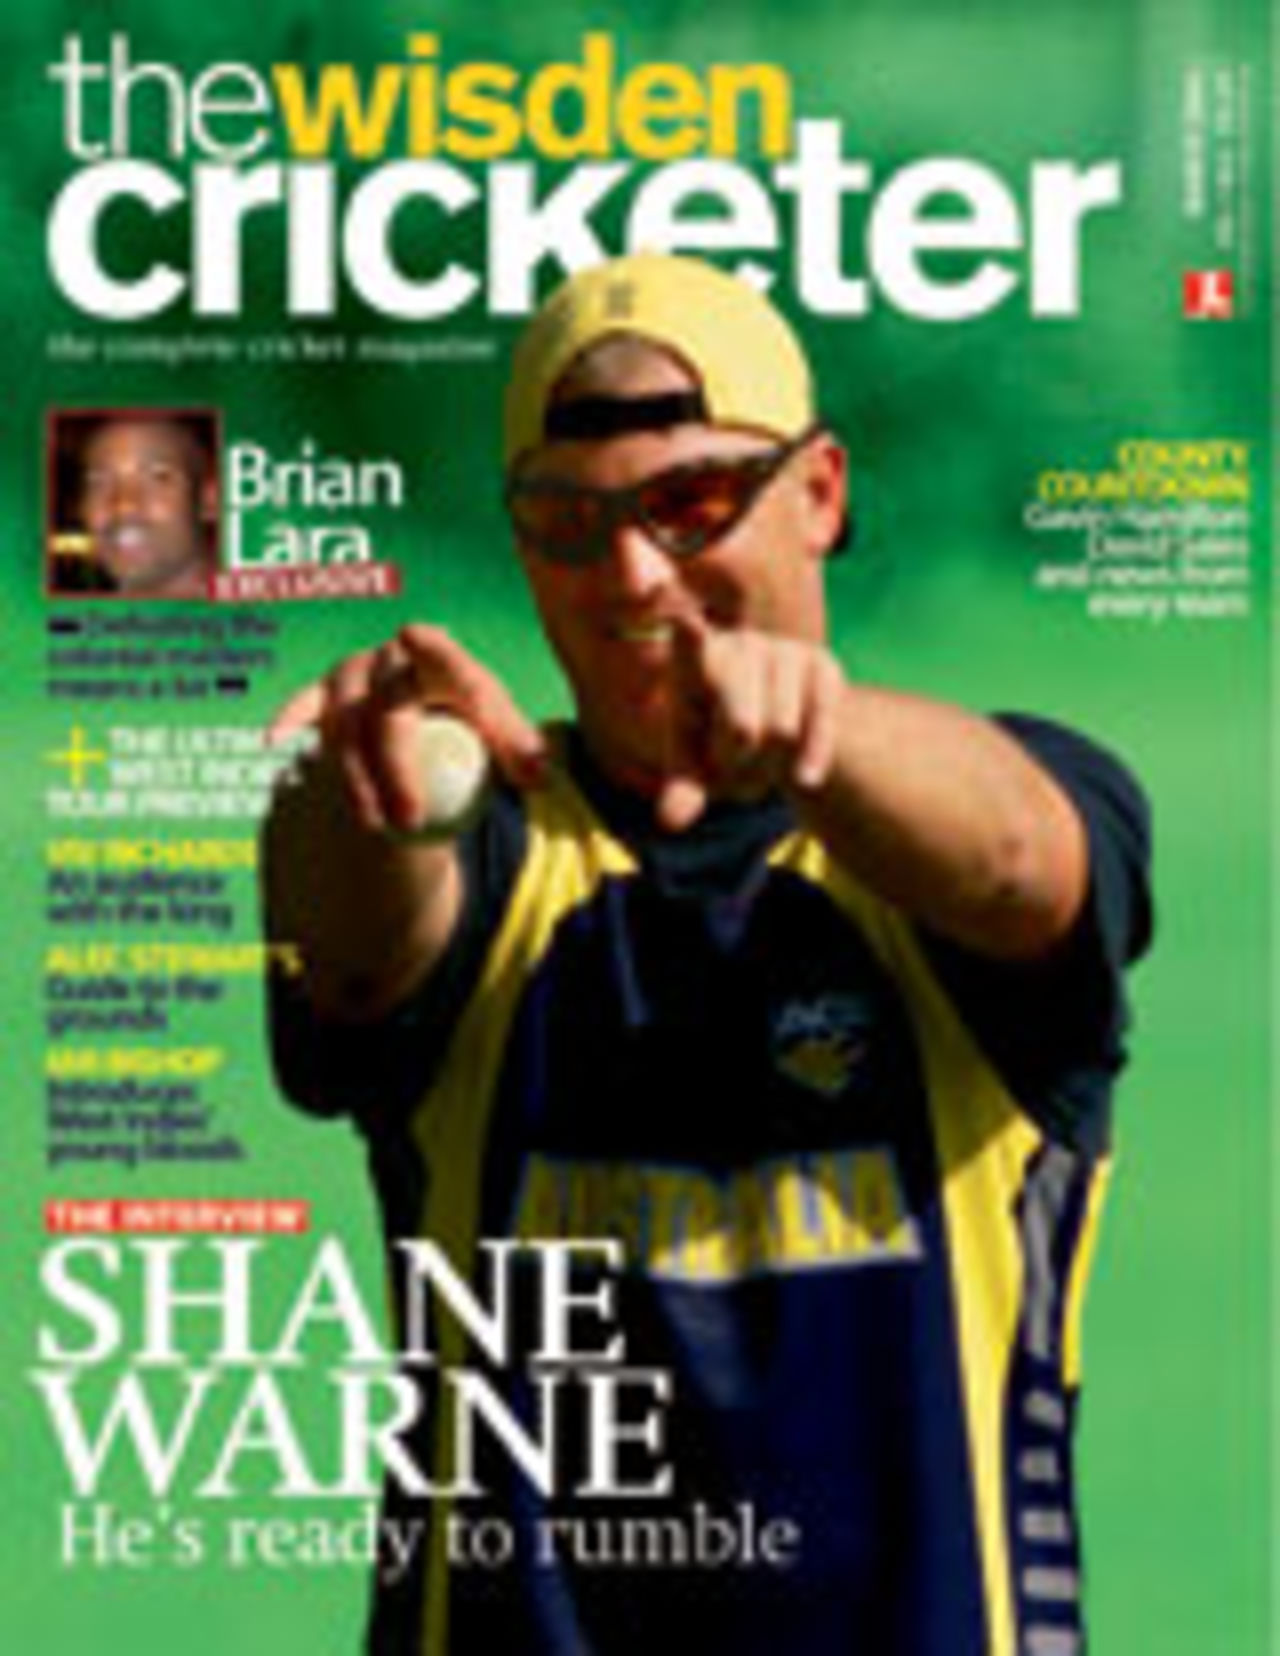 The Wisden Cricketer - Match 2004 cover